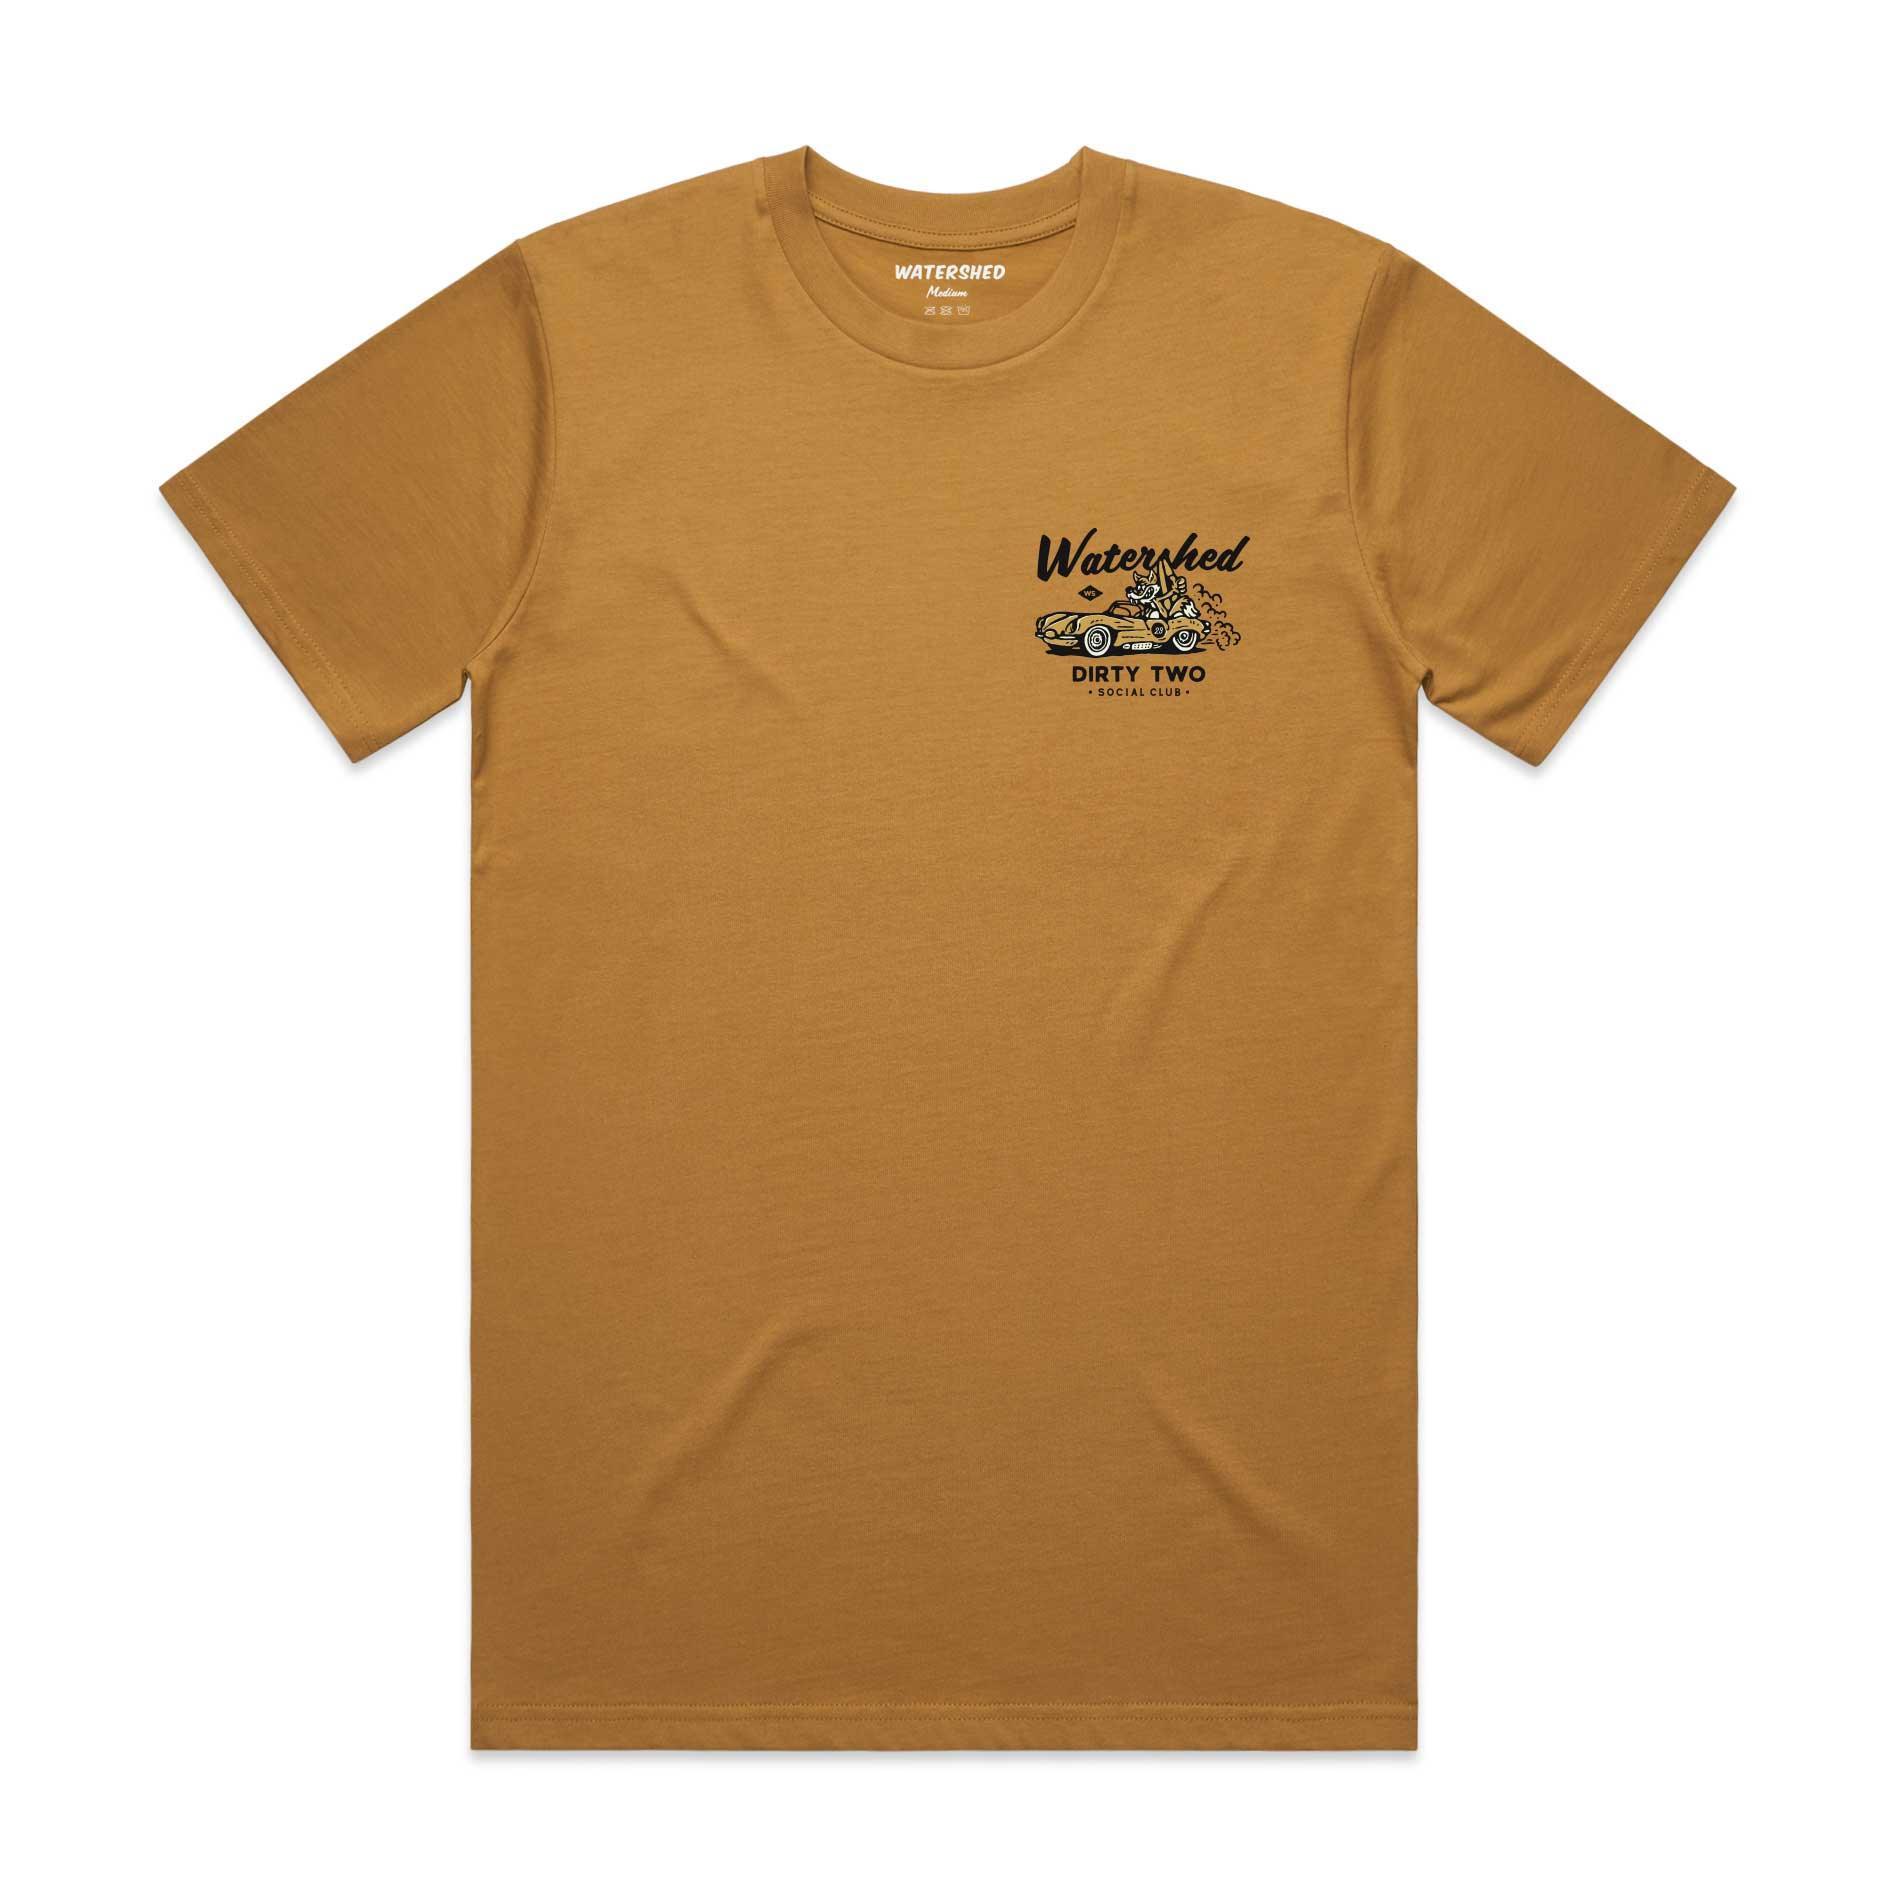 Dirty Two Social Club T-Shirt - Watershed Brand